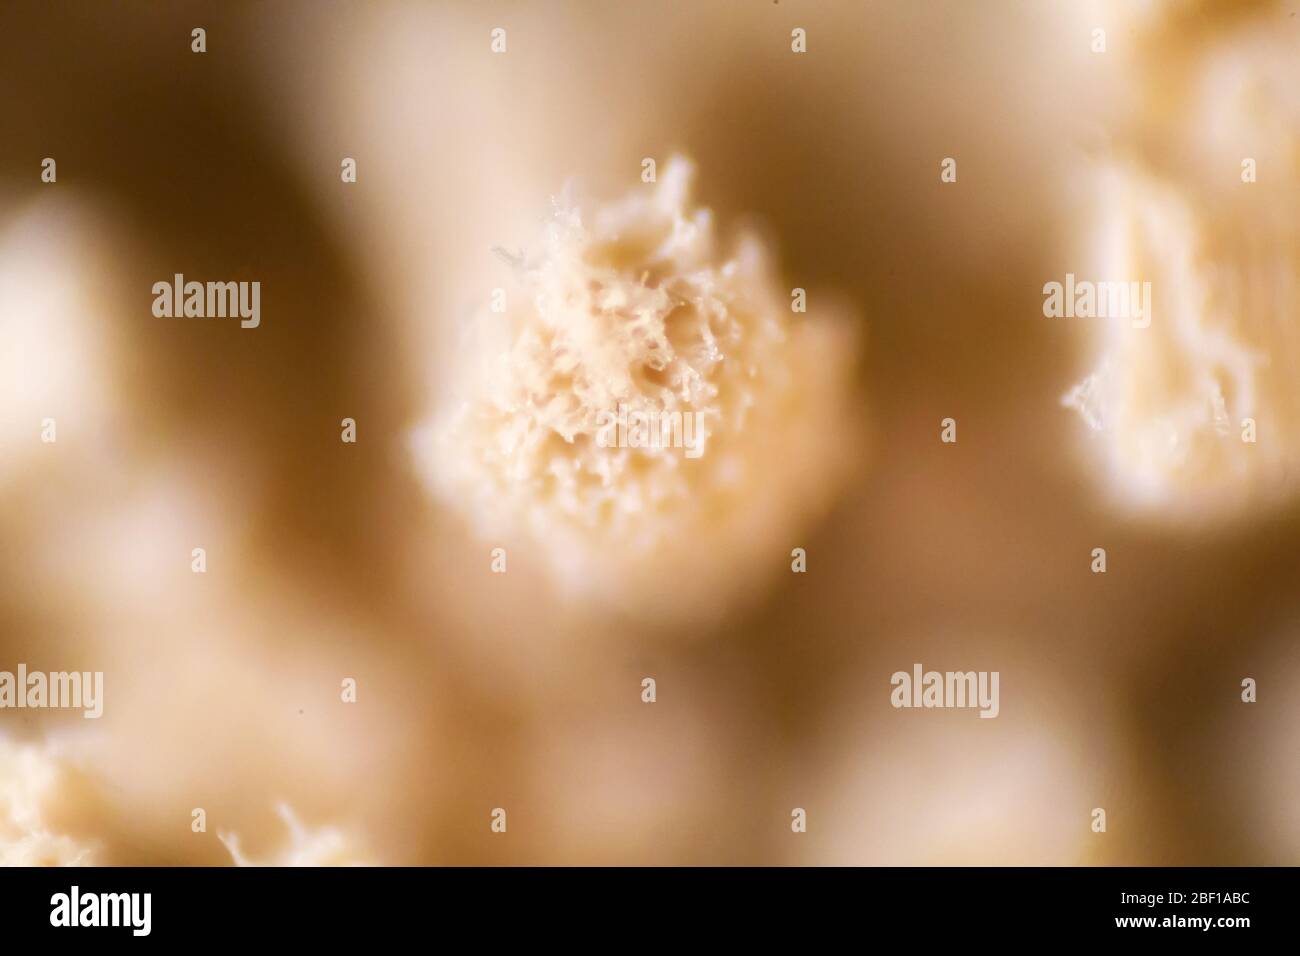 Aspergillus (mold) under microscope view in laboratory. Stock Photo